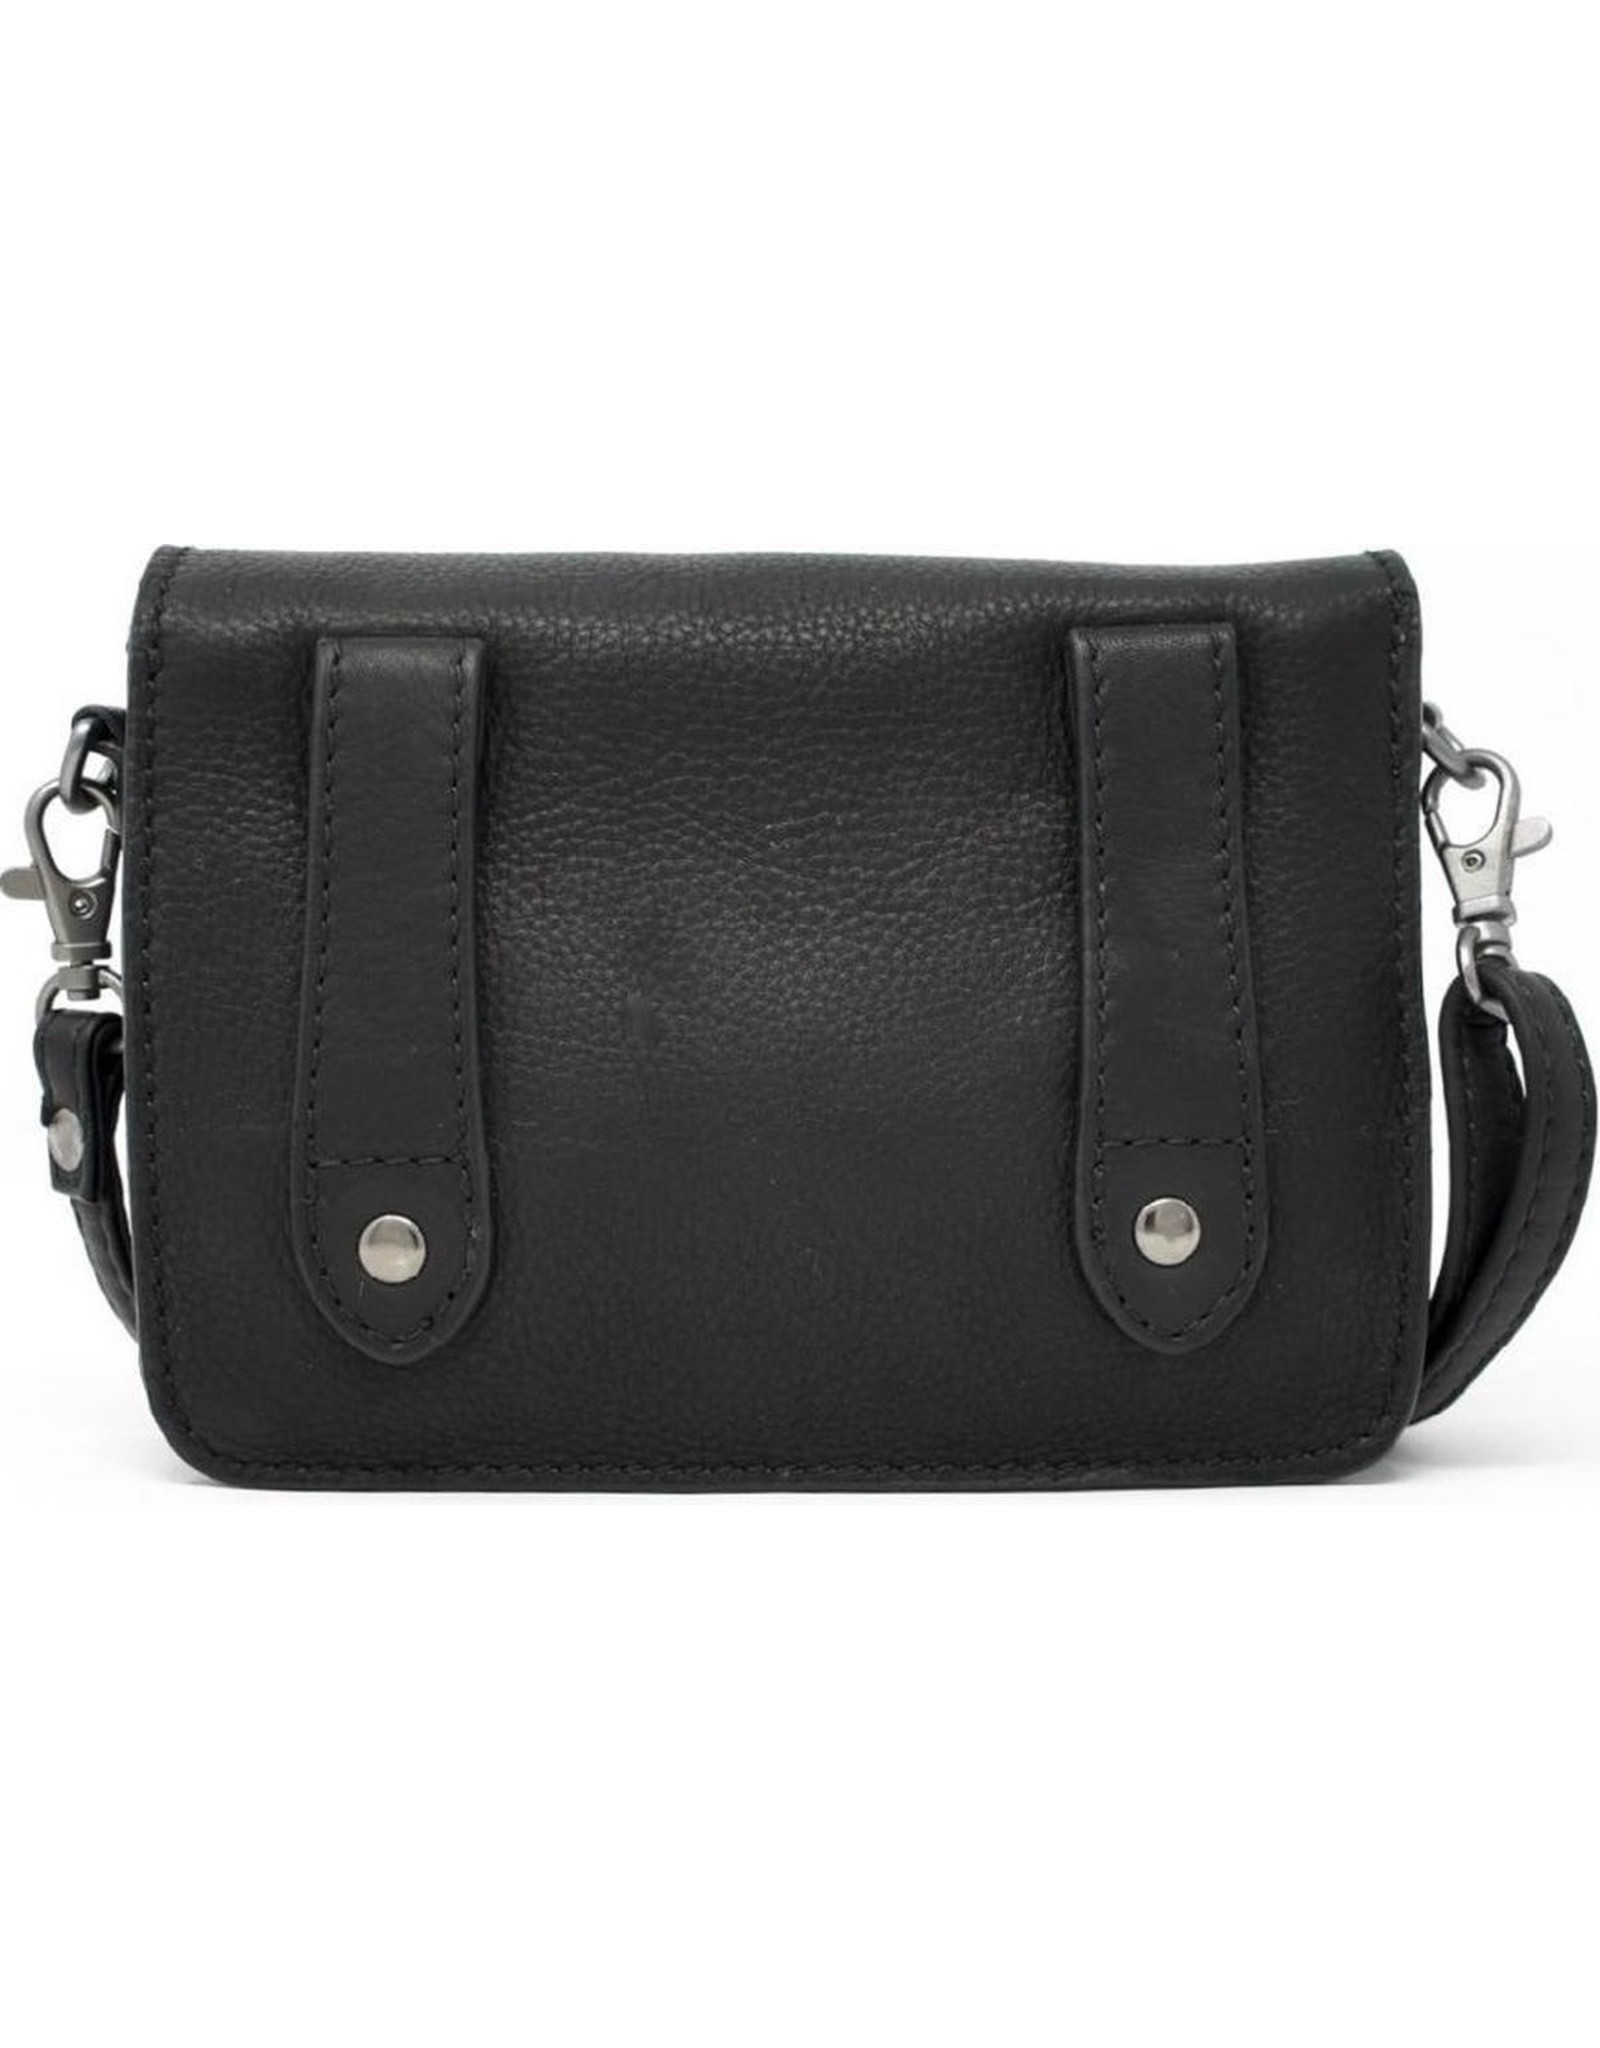 HillBurry Leather bags - Leather Shoulder Bag Black HillBurry 3279bl